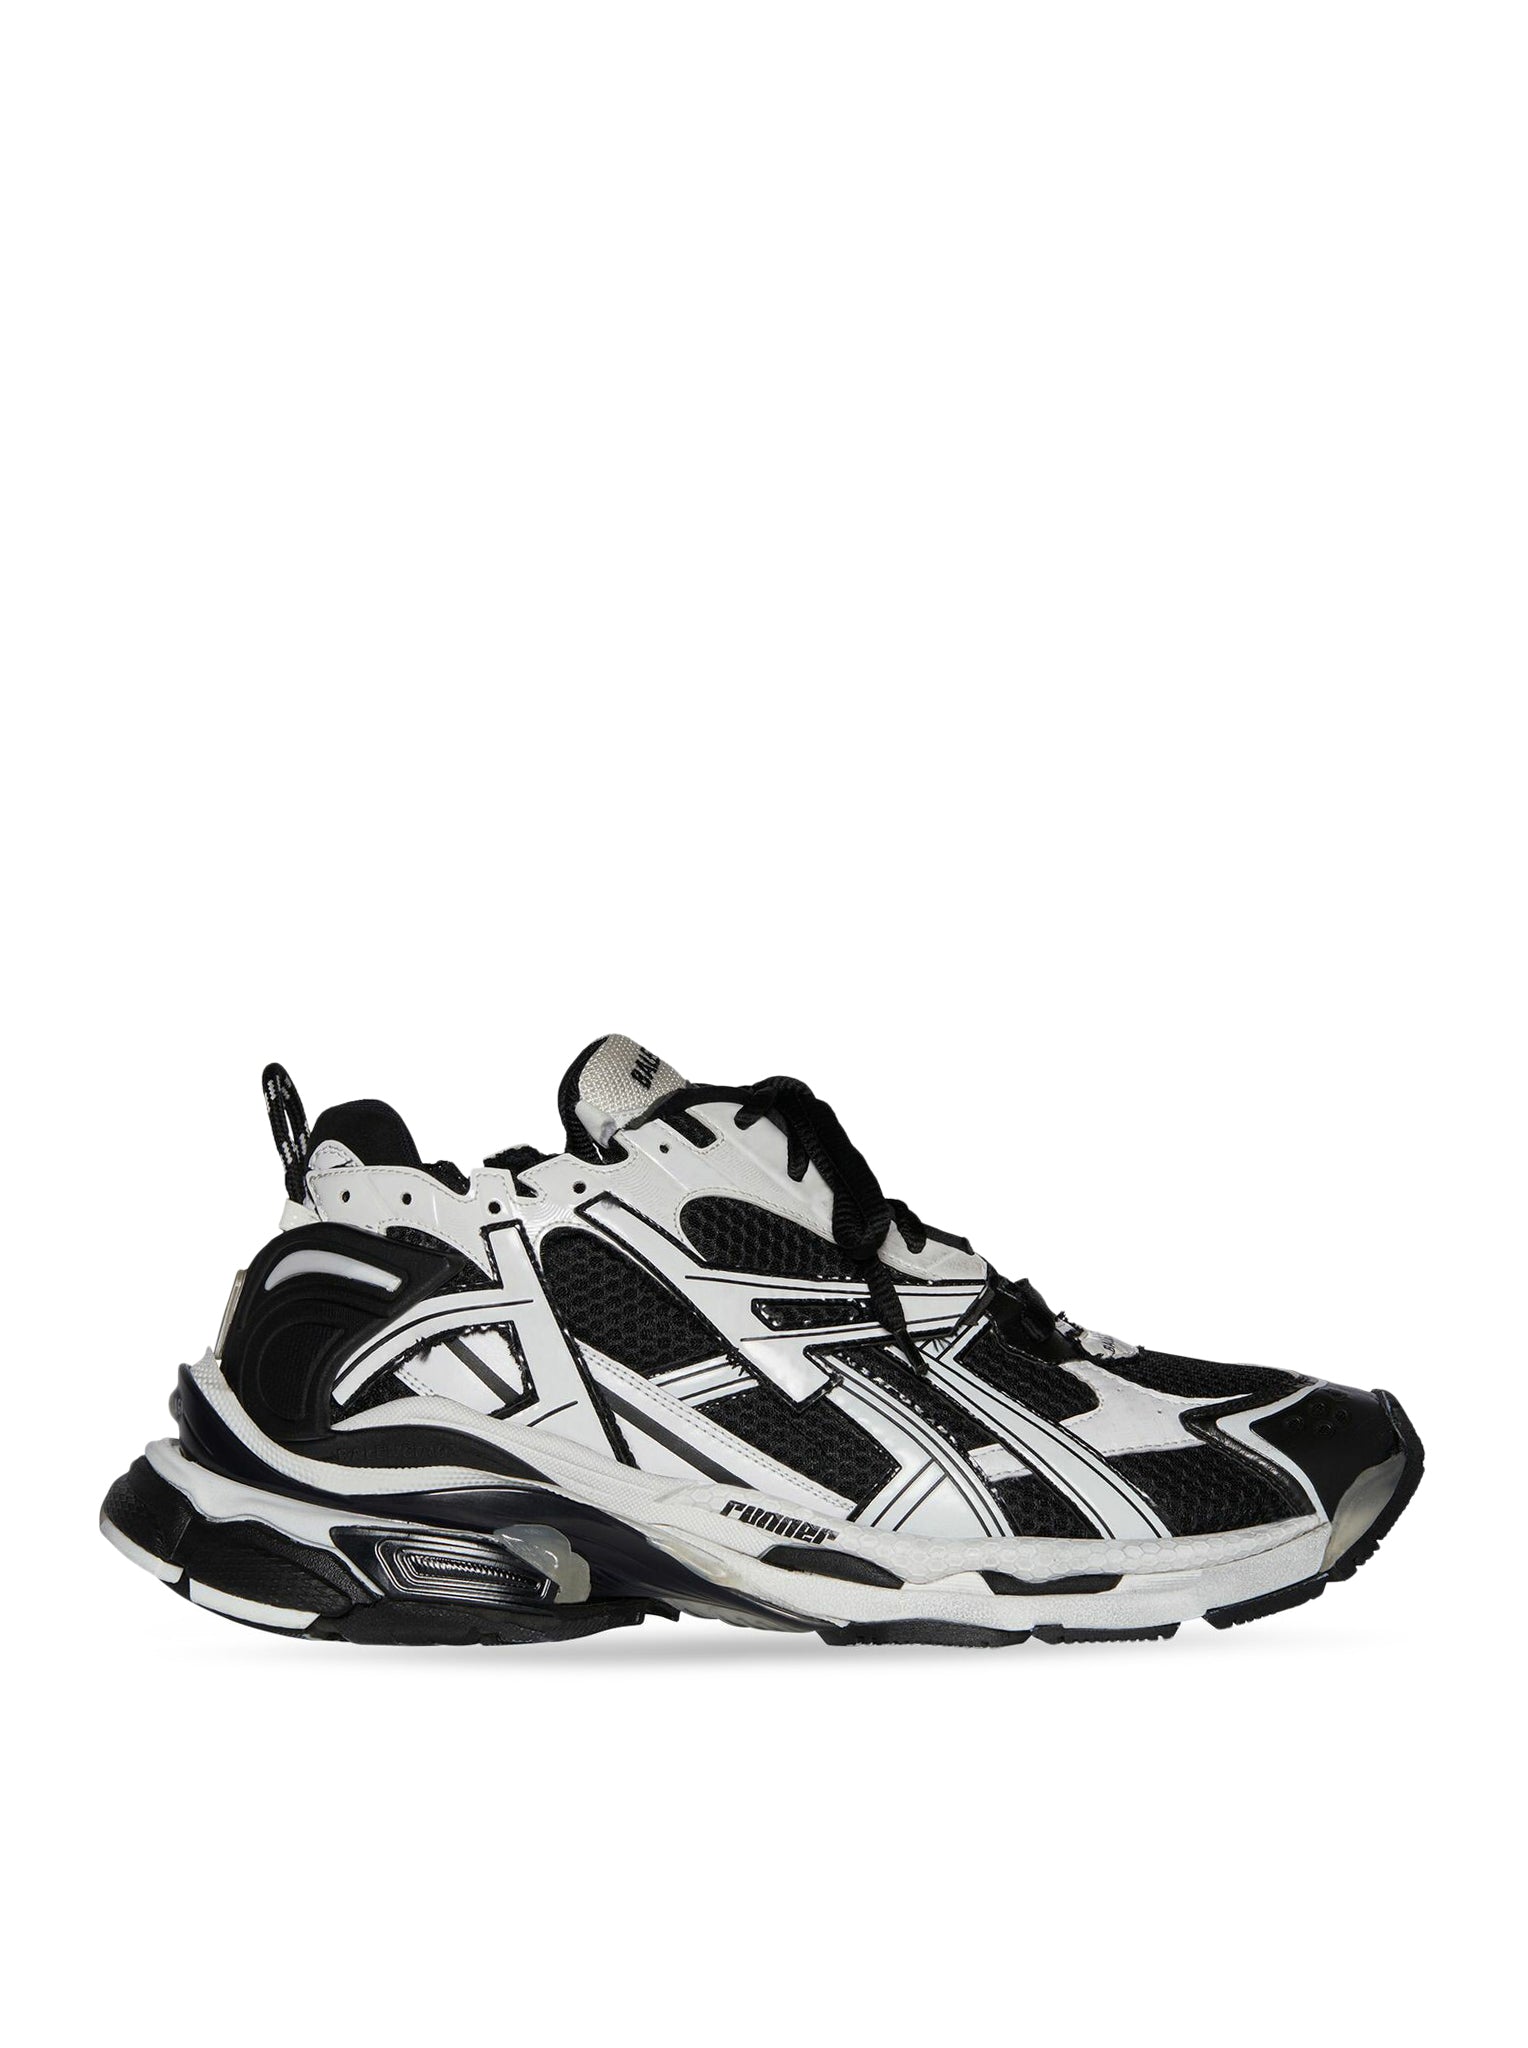 Sneakers Runner in mesh e nylon nero e bianco